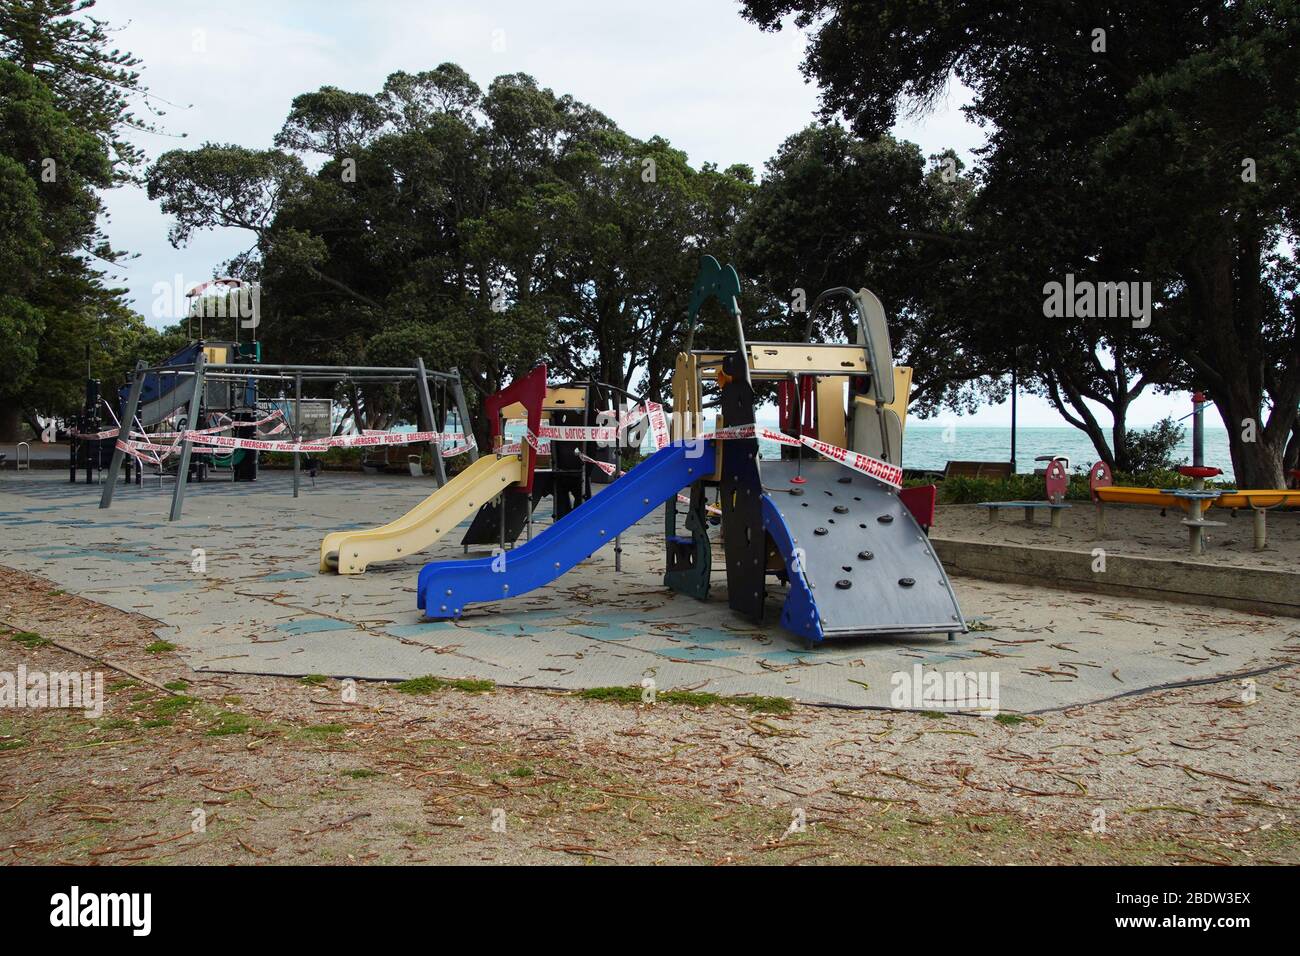 Red and white police emergency warning tape on outdoor children's playground equipment preventing use during the coronavirus lockdown.  Crime scene. Stock Photo